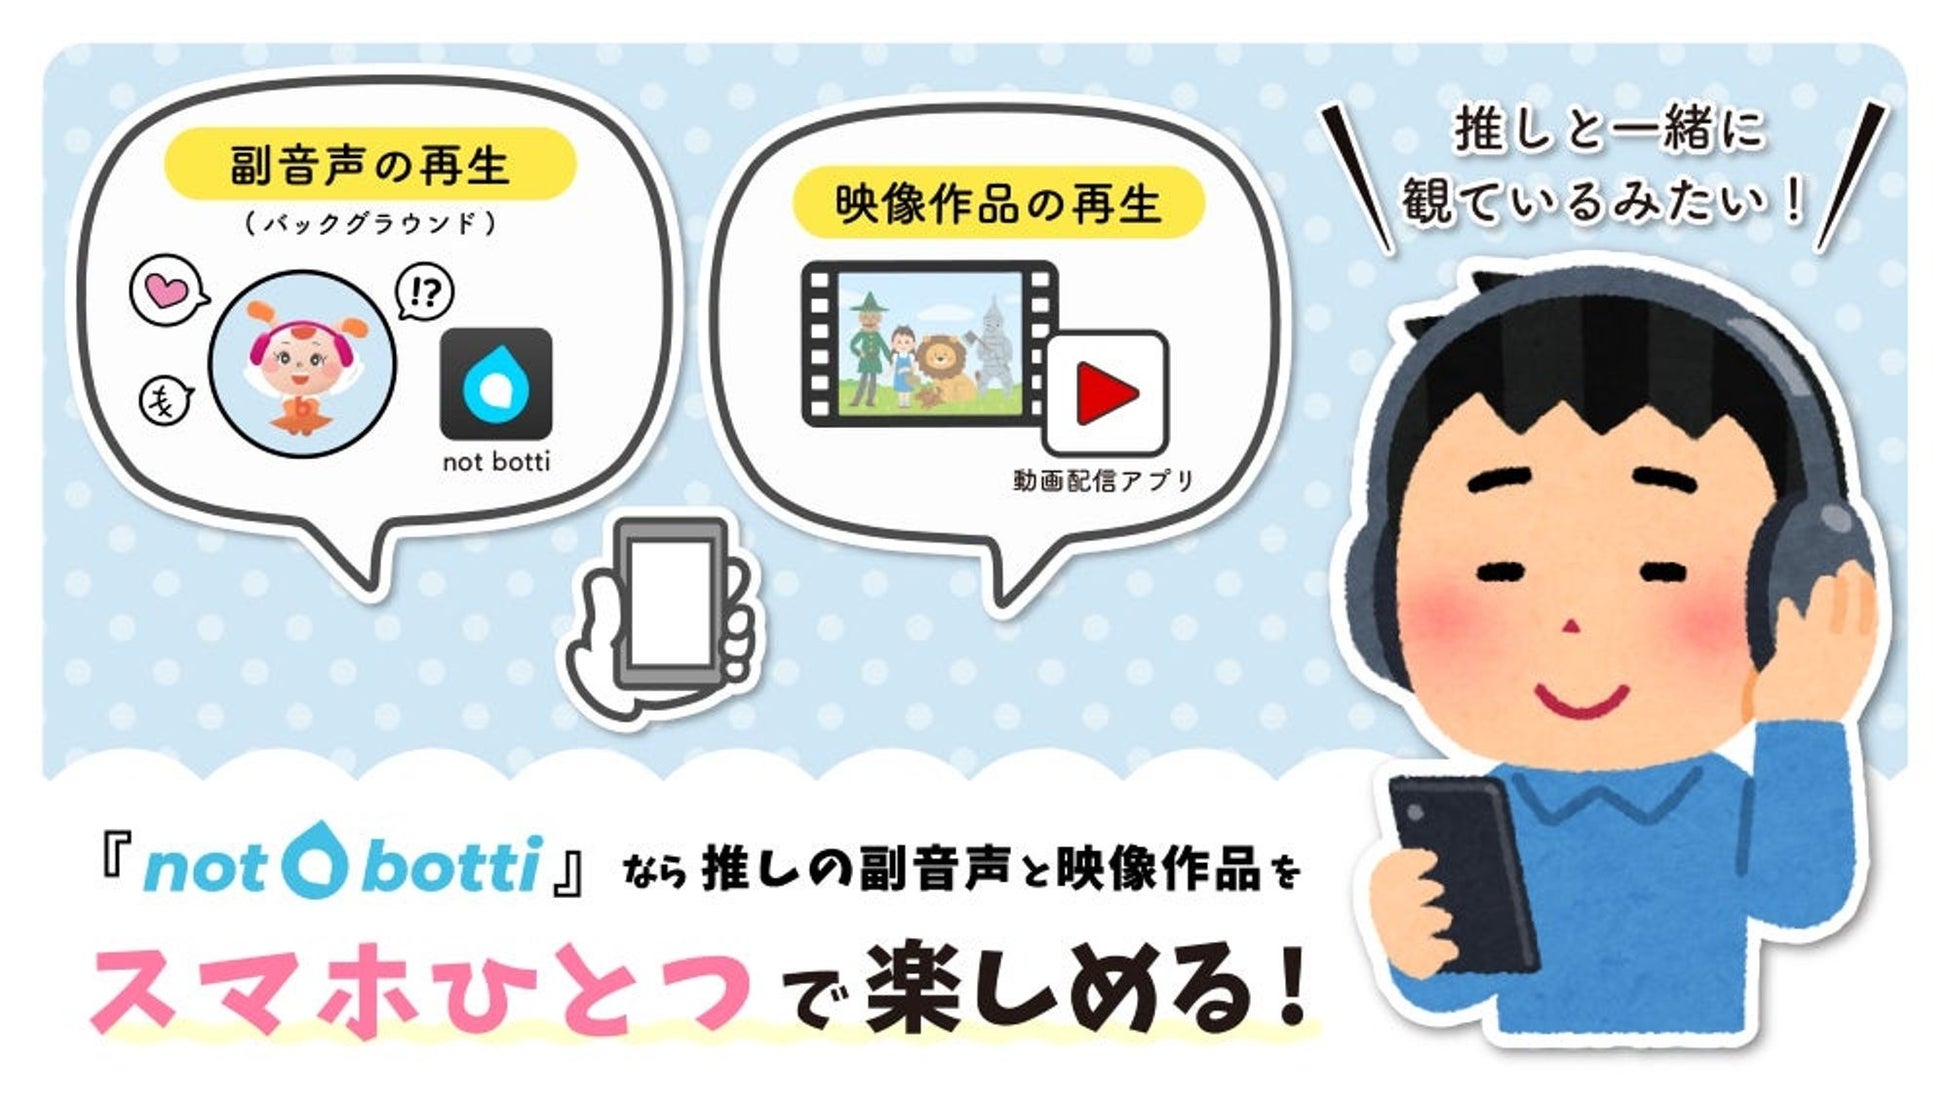 GAACAL×TVアニメ『カードキャプターさくら』コラボ商品 第2弾の予約販売を開始!